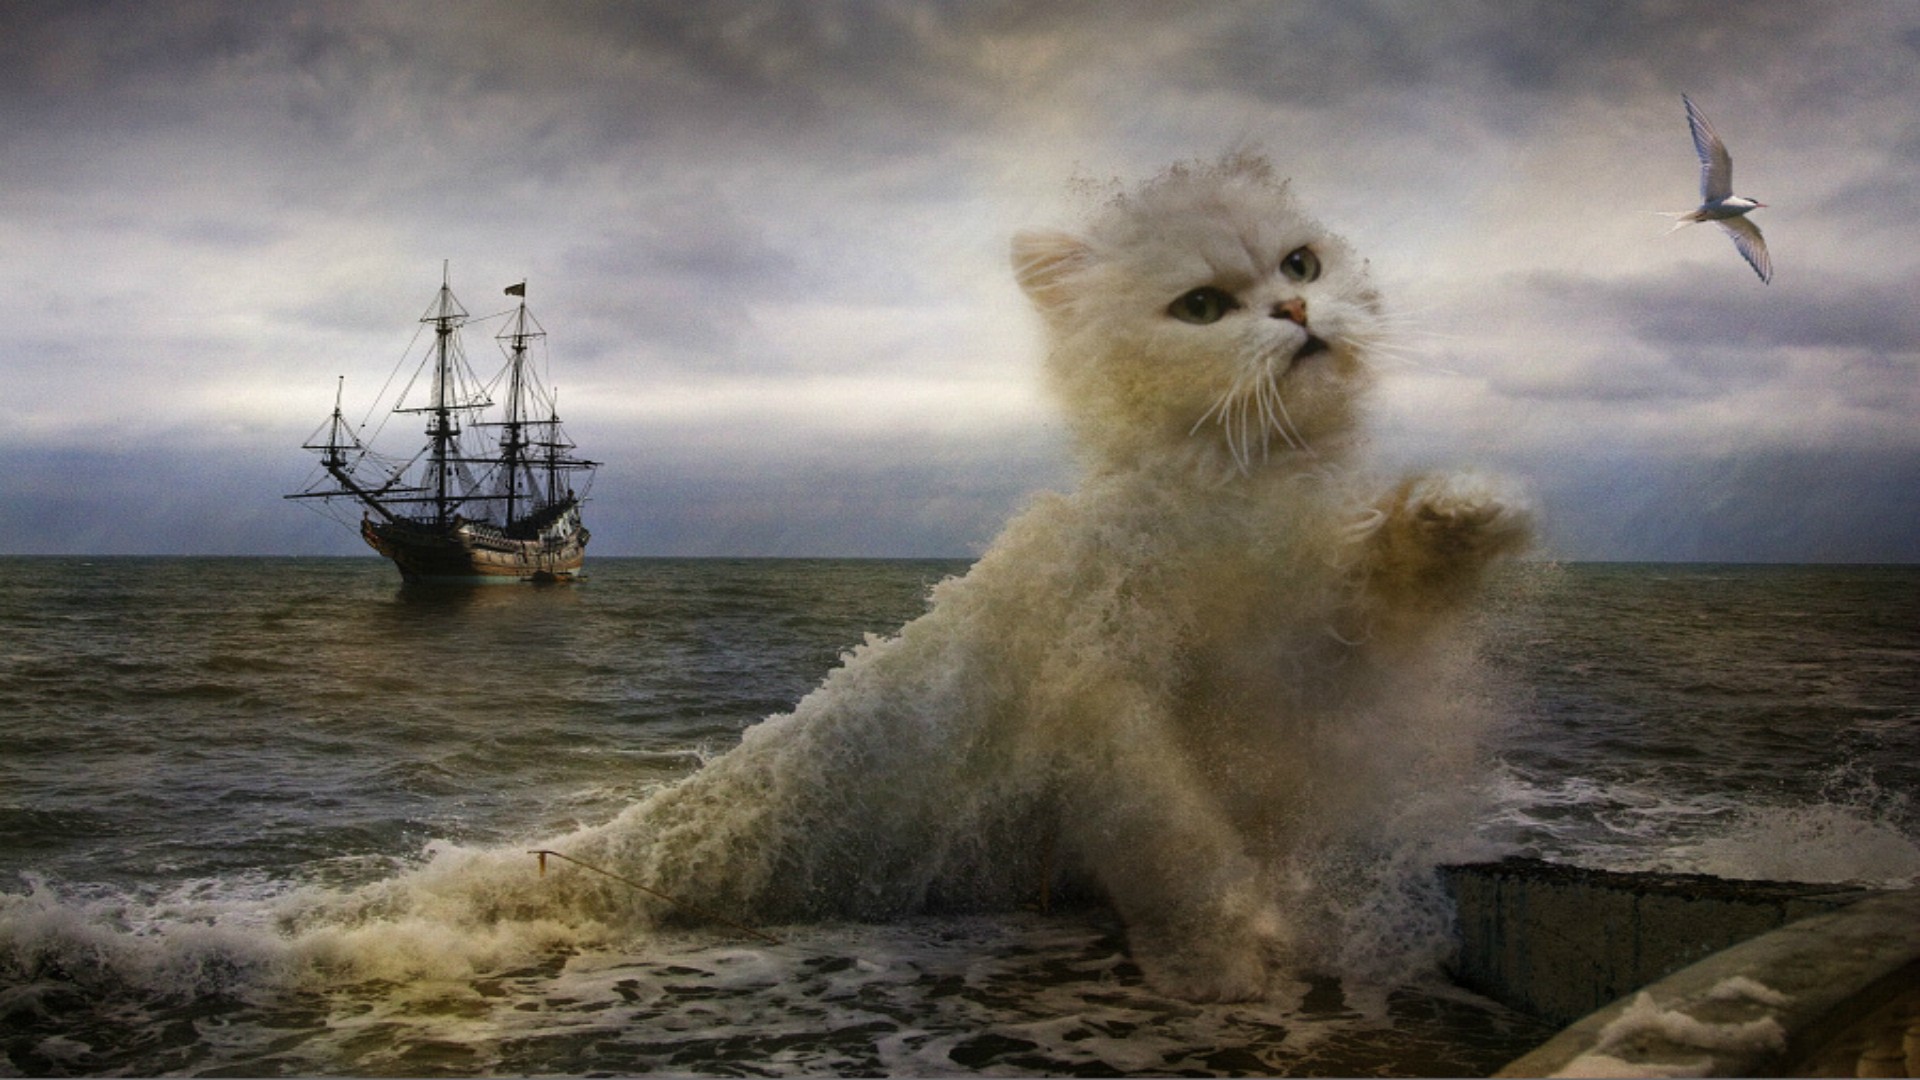 General 1920x1080 digital art cats ship fantasy art animals mammals birds sailing ship sea